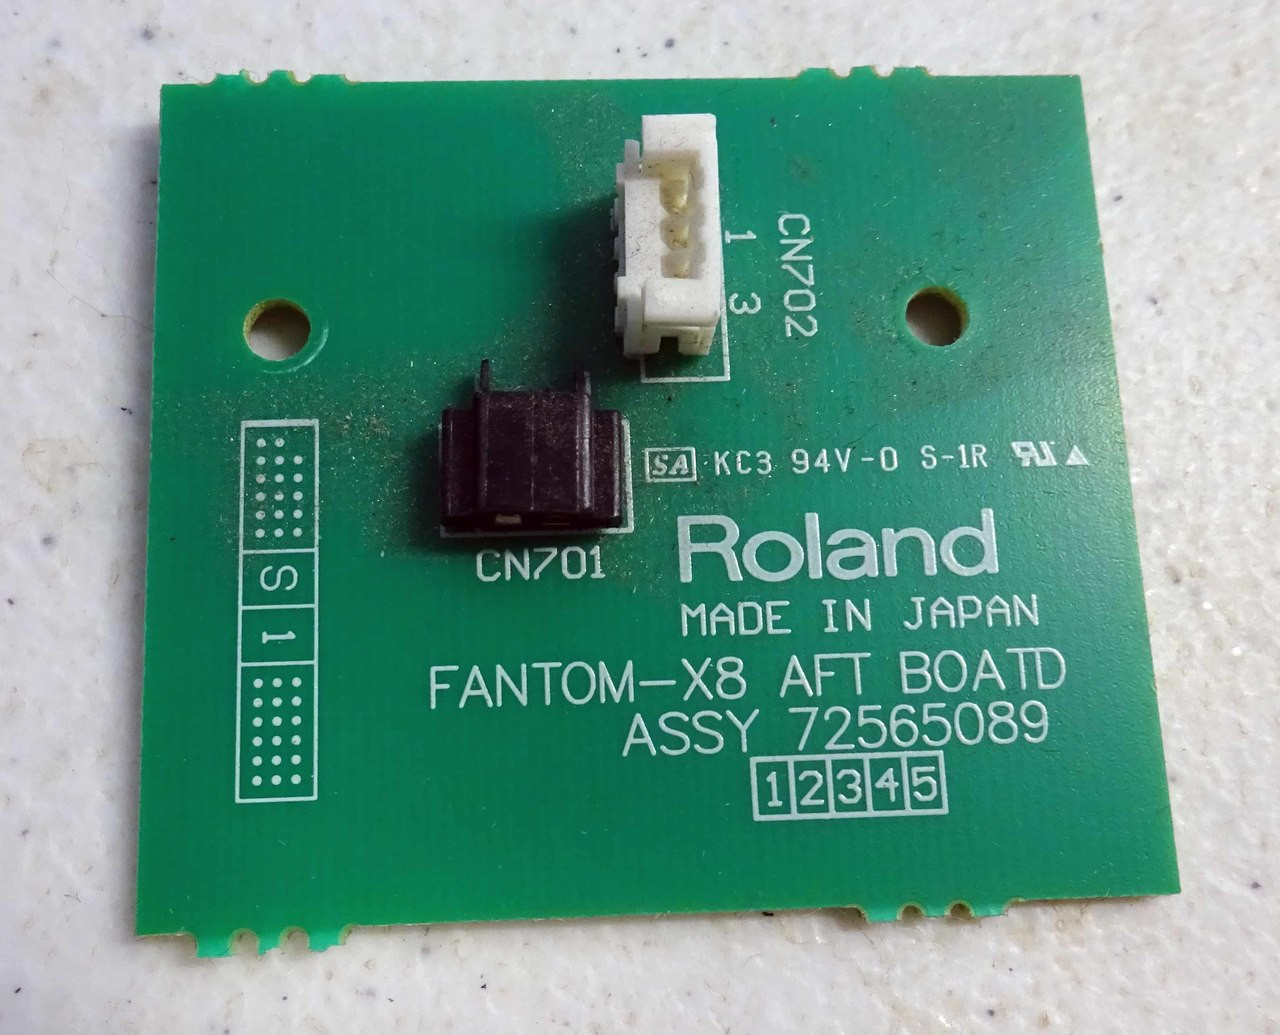 Roland Fantom X8 After Board Assembly